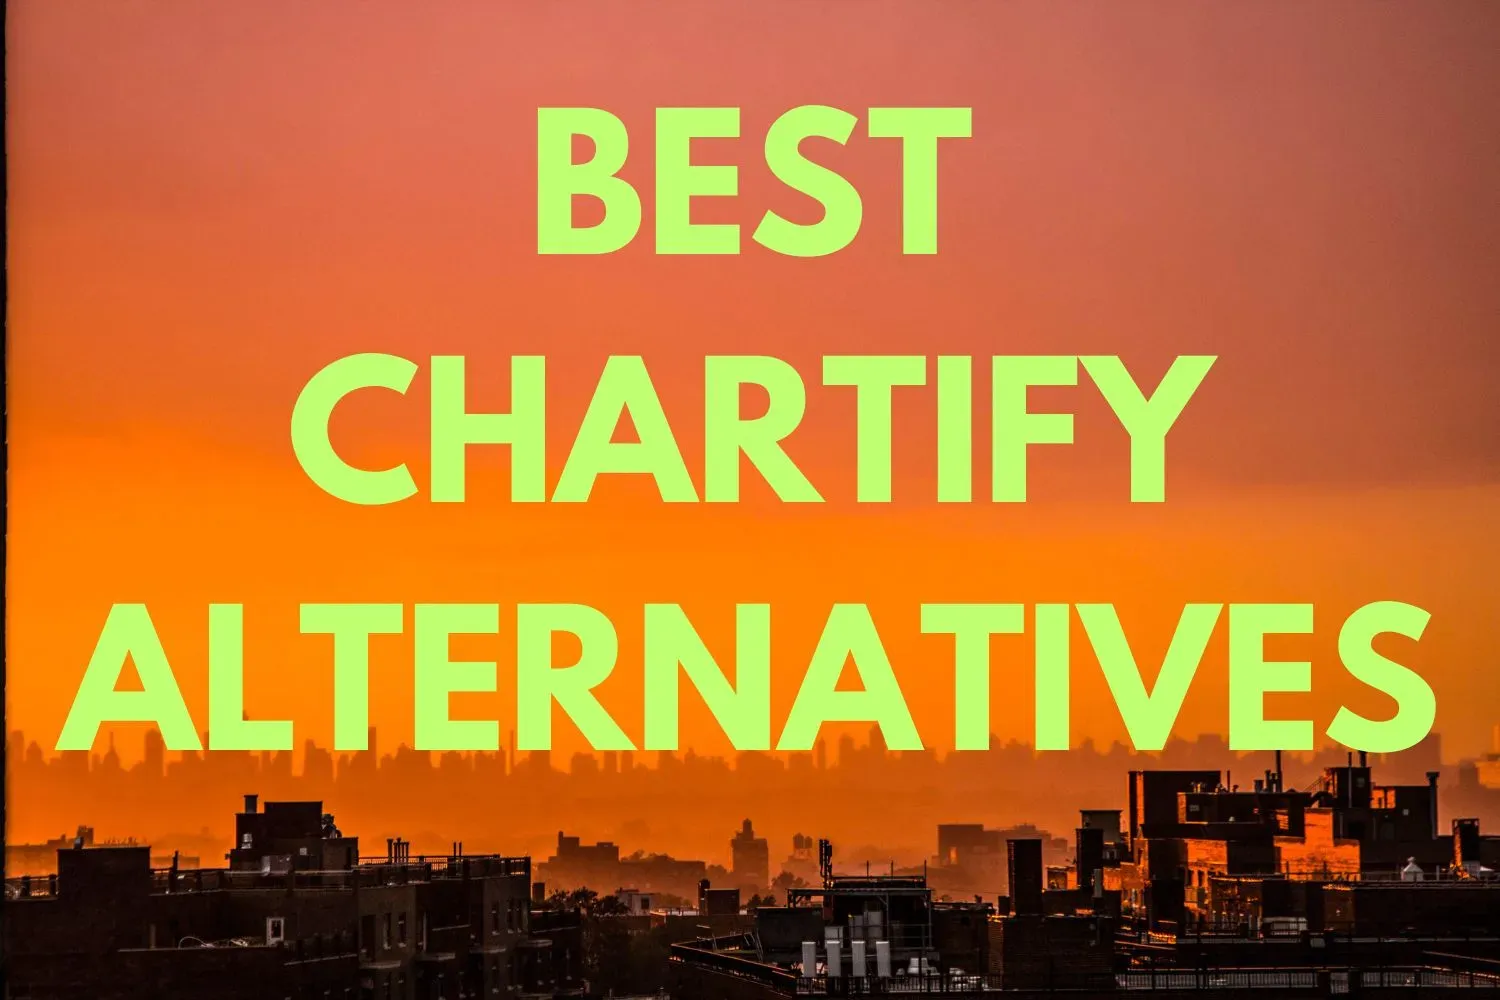 Best Chartify Alternatives